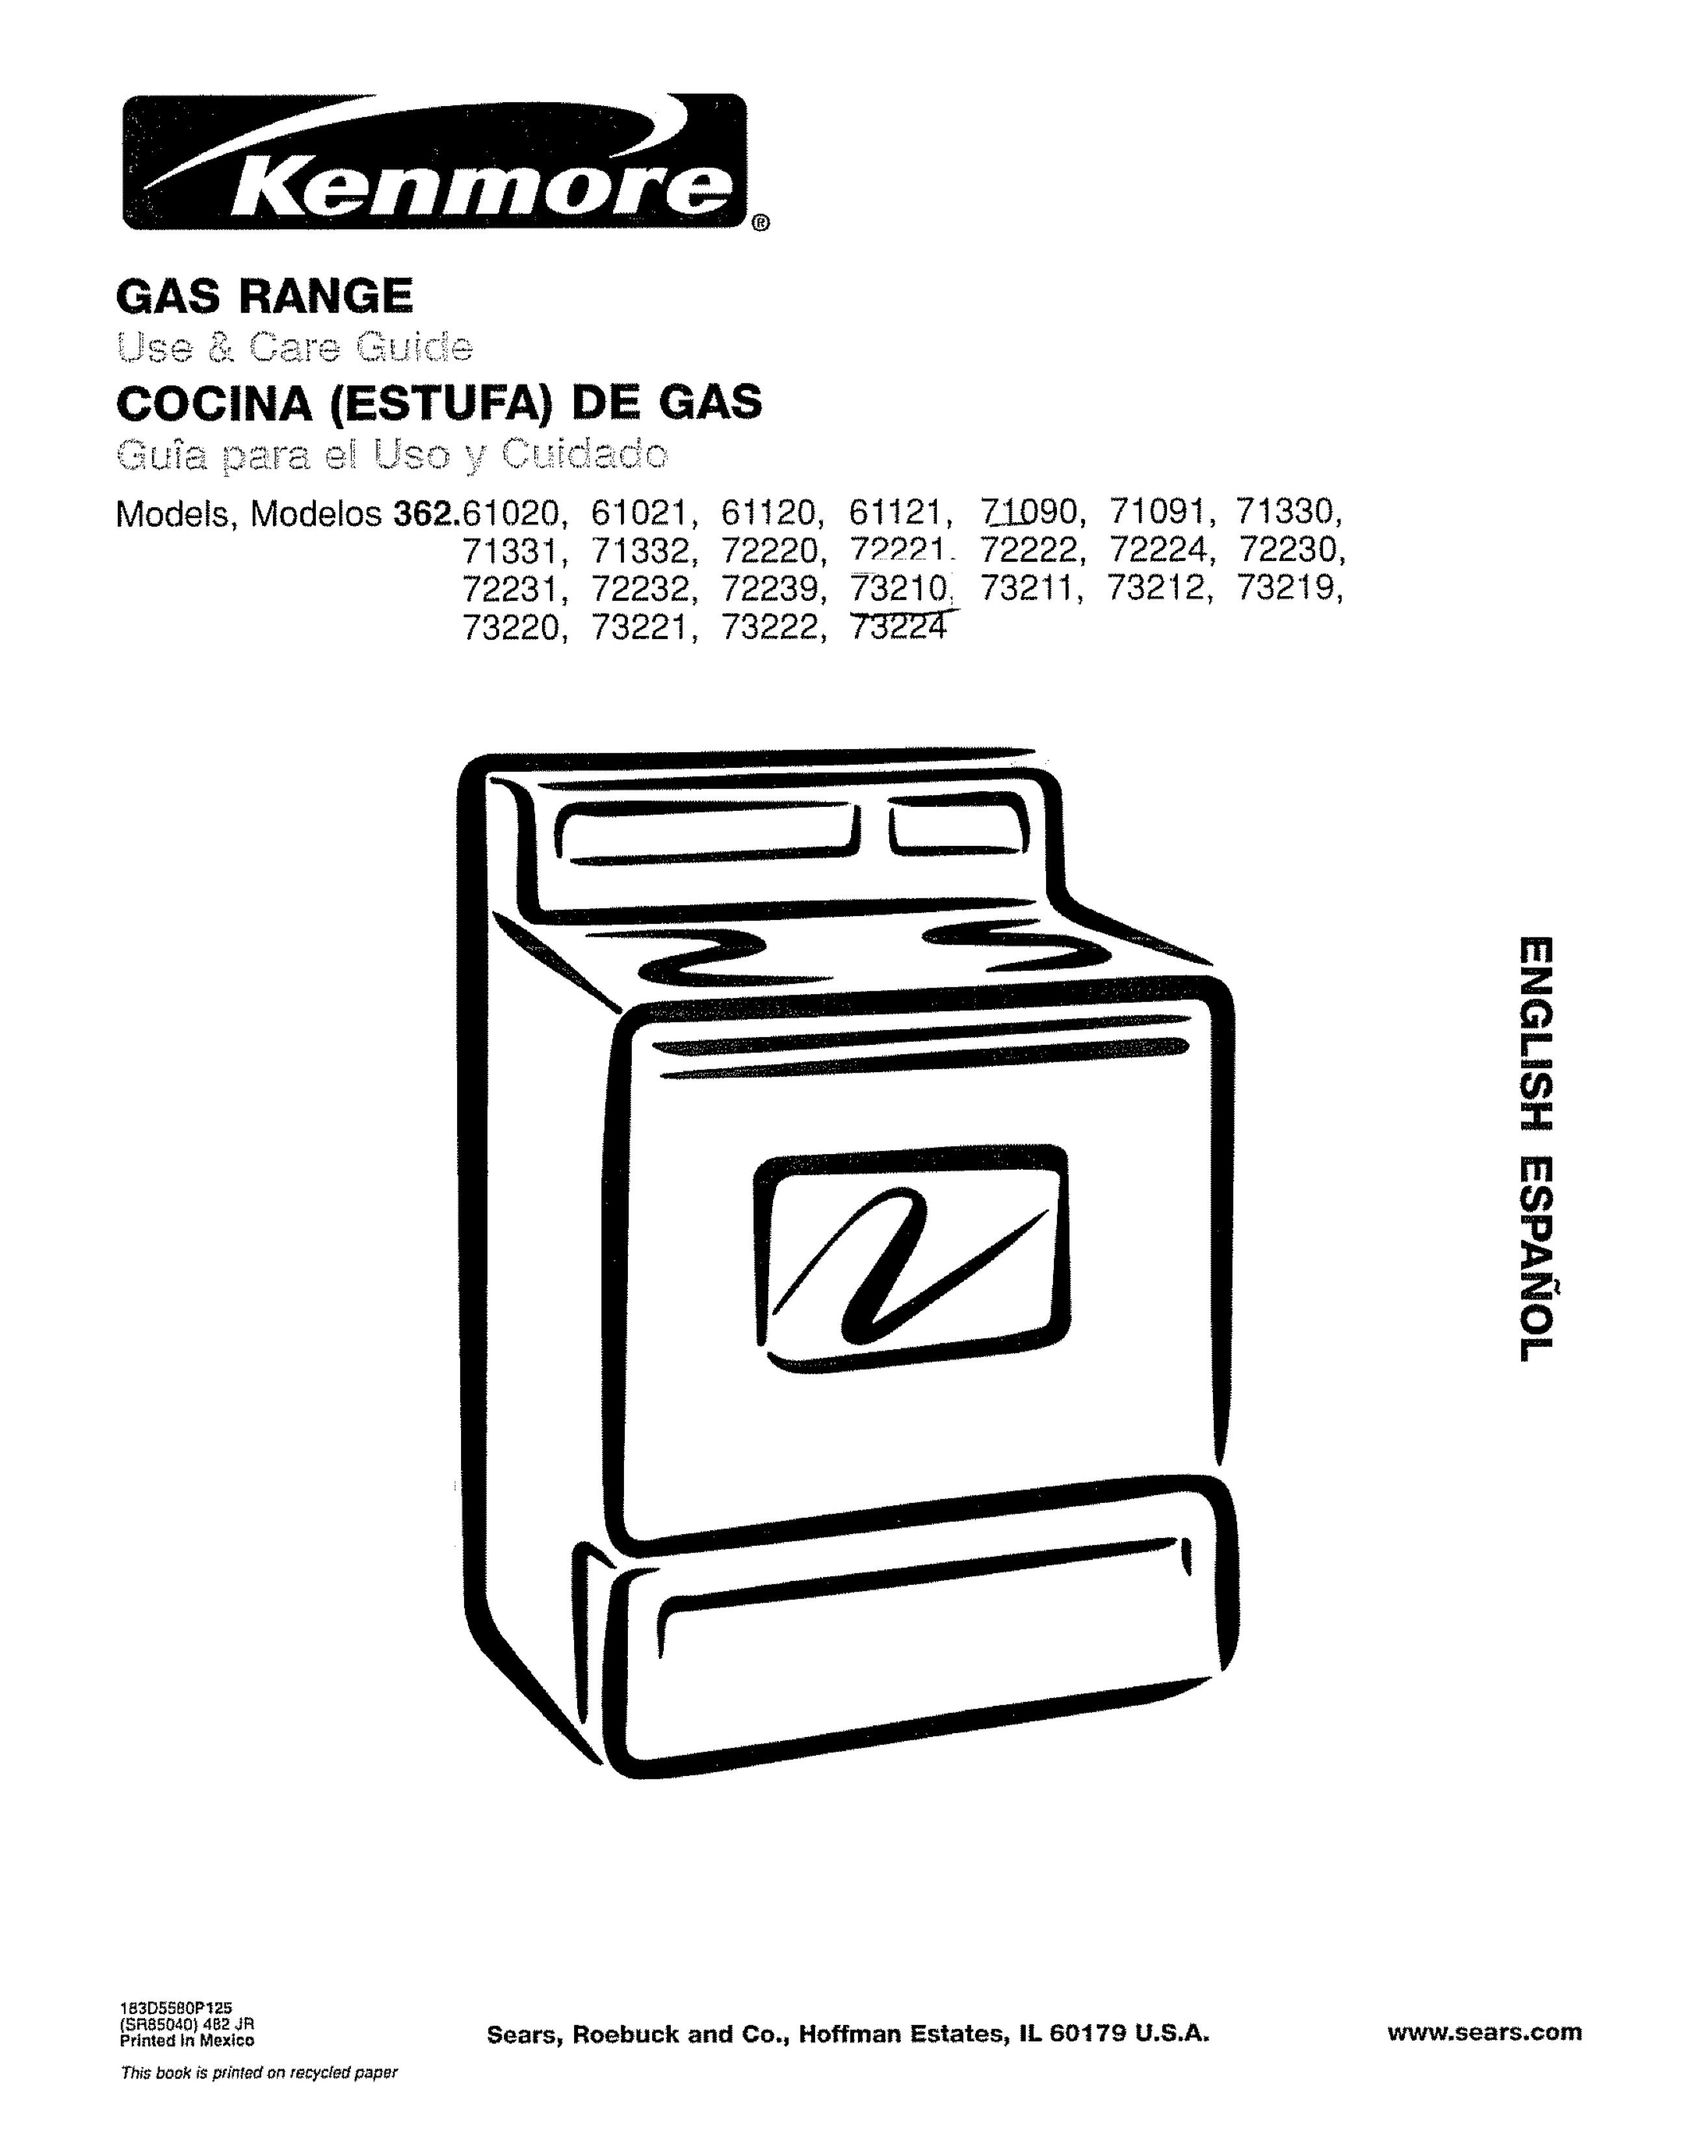 Kenmore 362.71332 Range User Manual